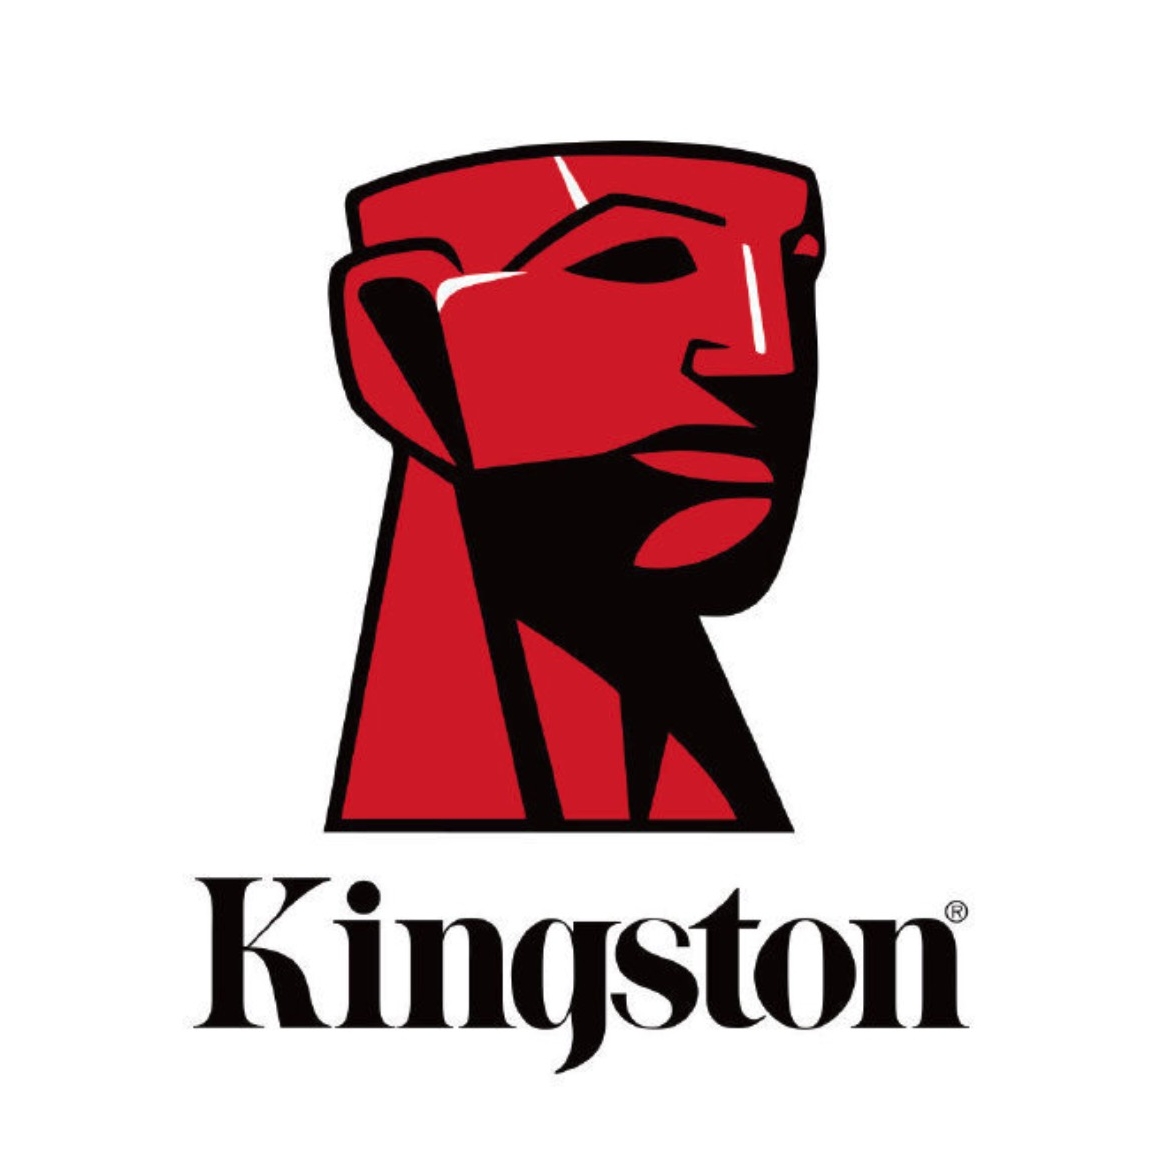 金士顿 Kingston